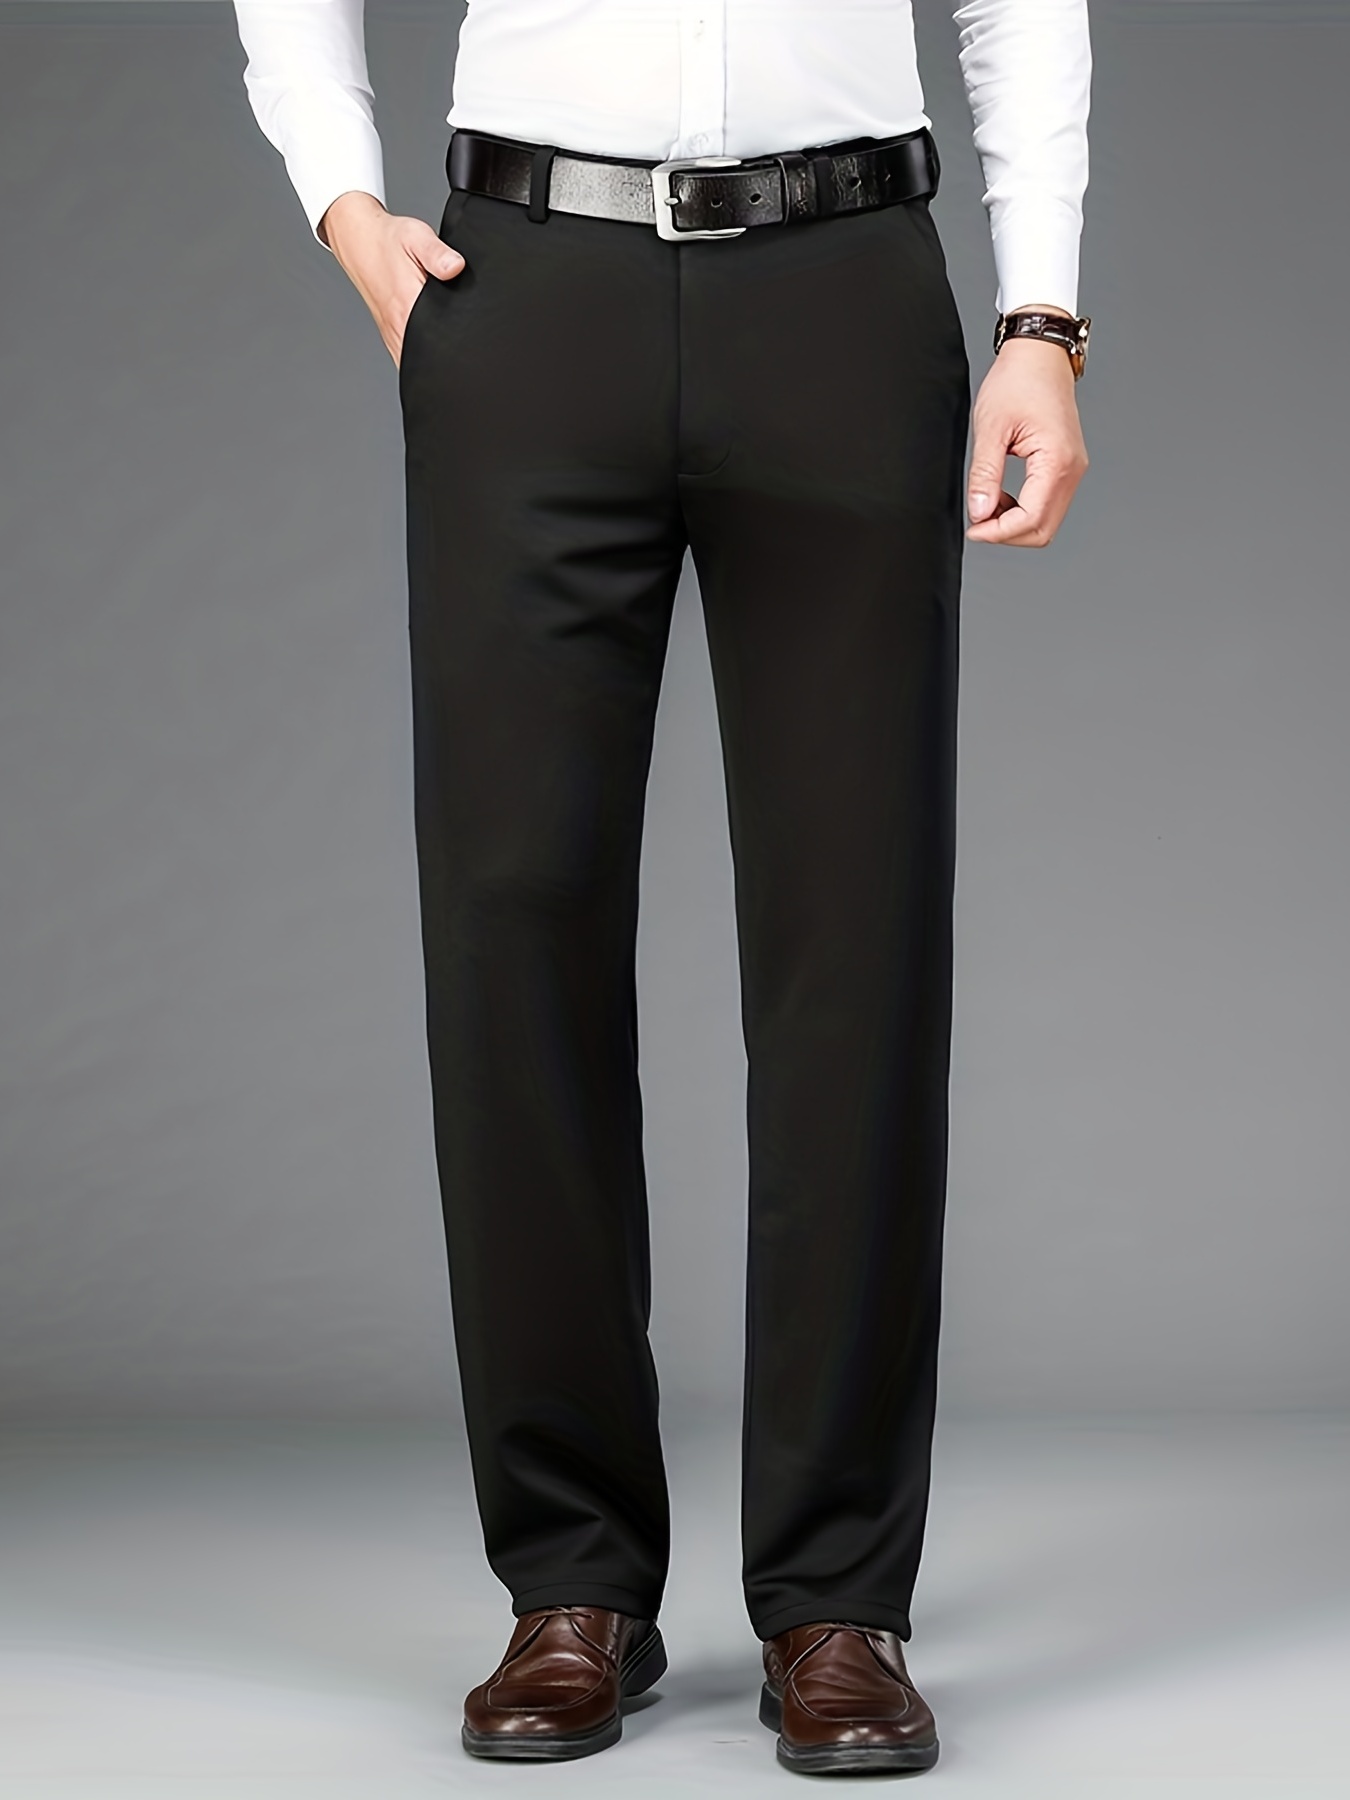 Men Black Formal Pant| Men Party Wear| Emerald Dress Pants | SAINLY-baongoctrading.com.vn